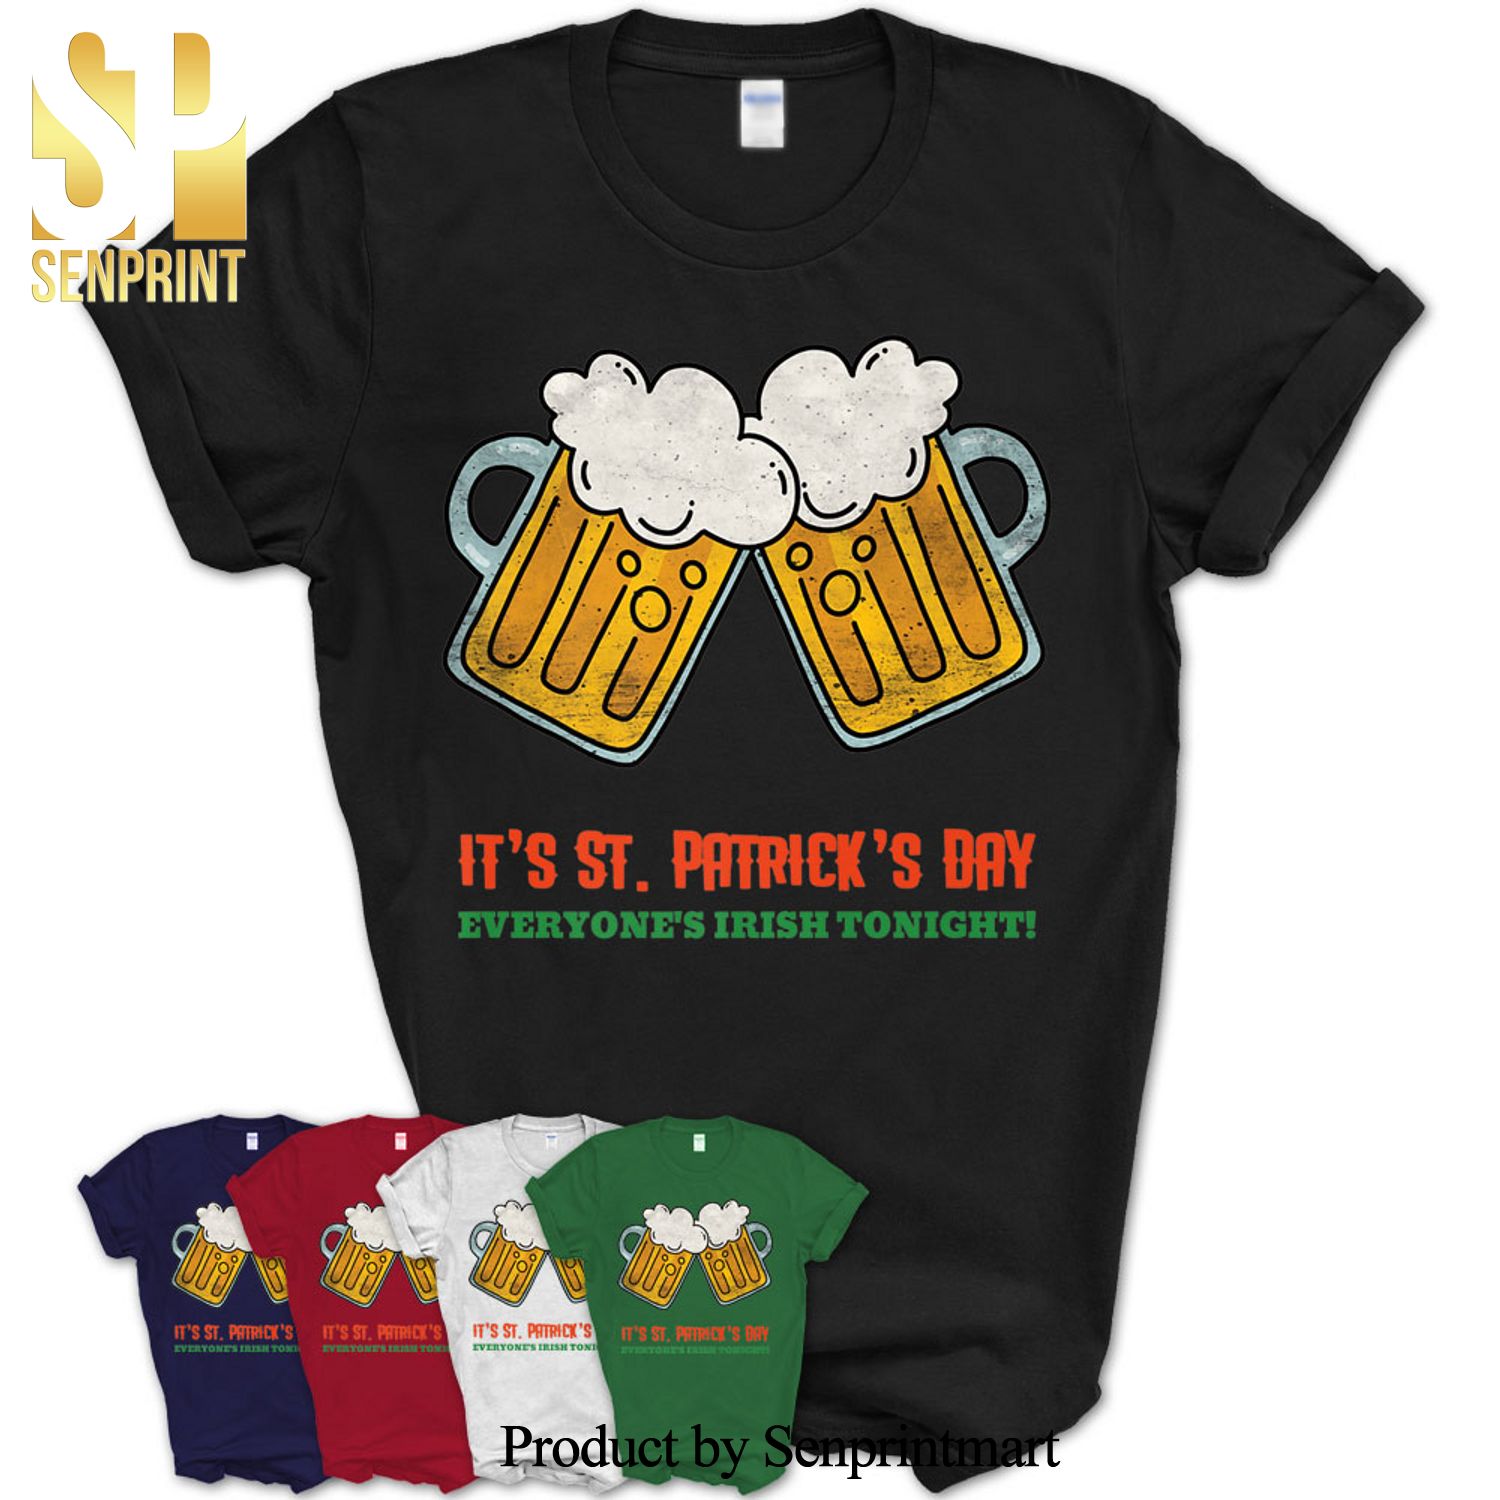 Its Saint Patrick’s Day Everyones Irish Tonight! Beer Party Shirt